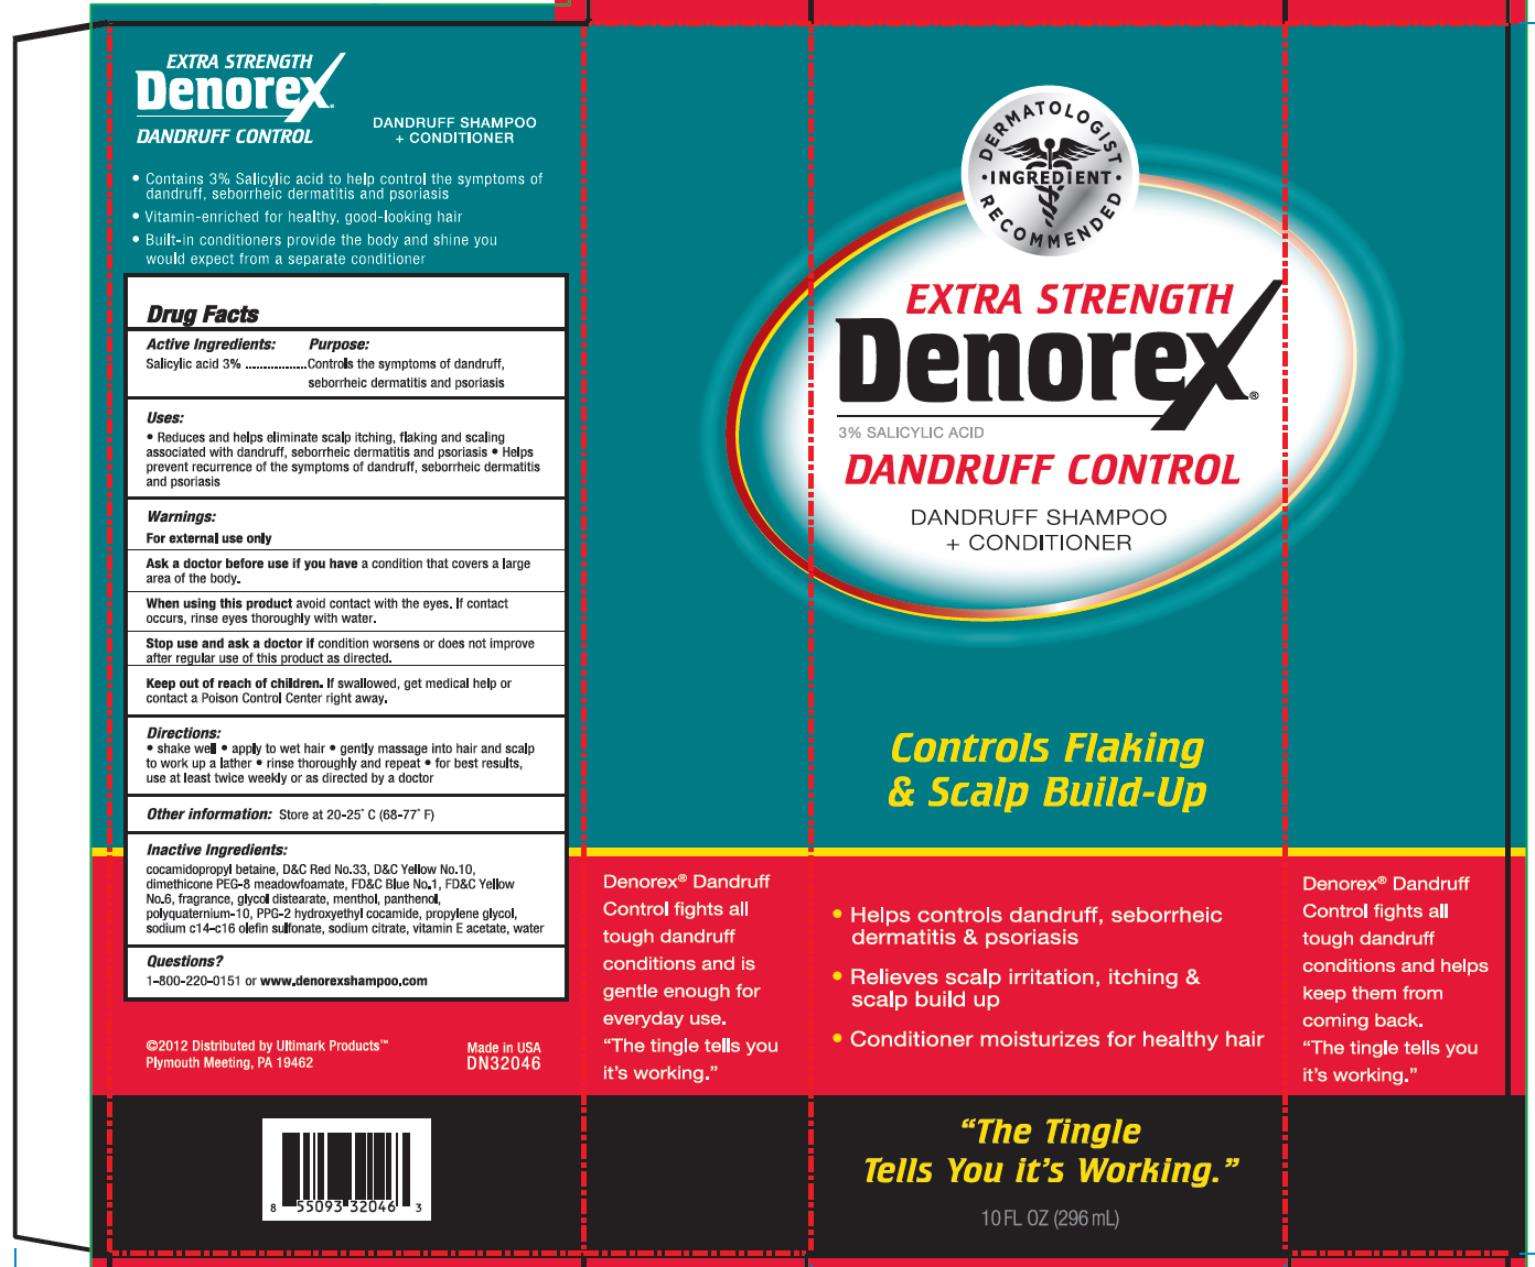 Denorex Extra Strength